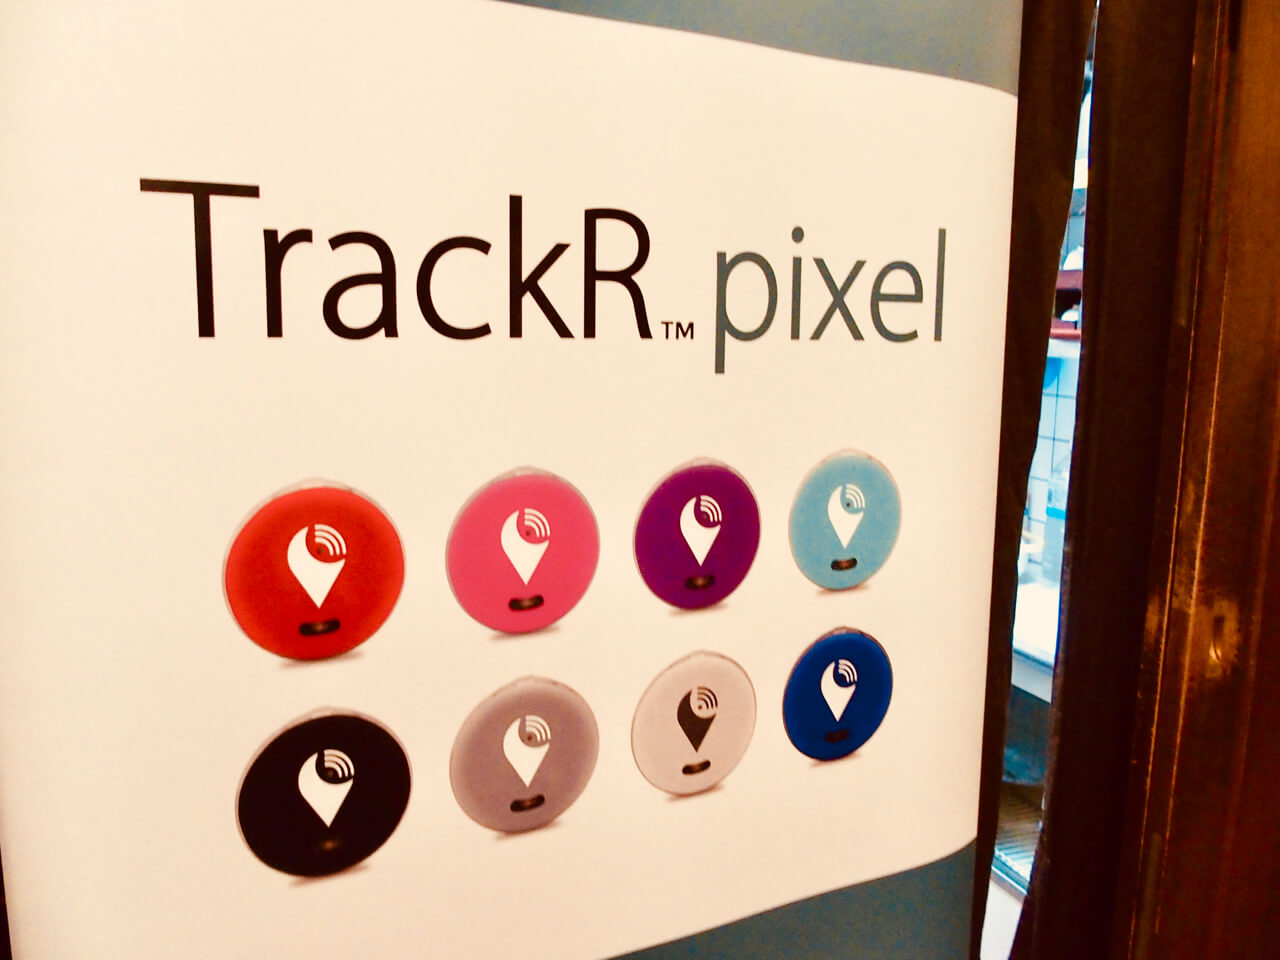 TrackR pixel